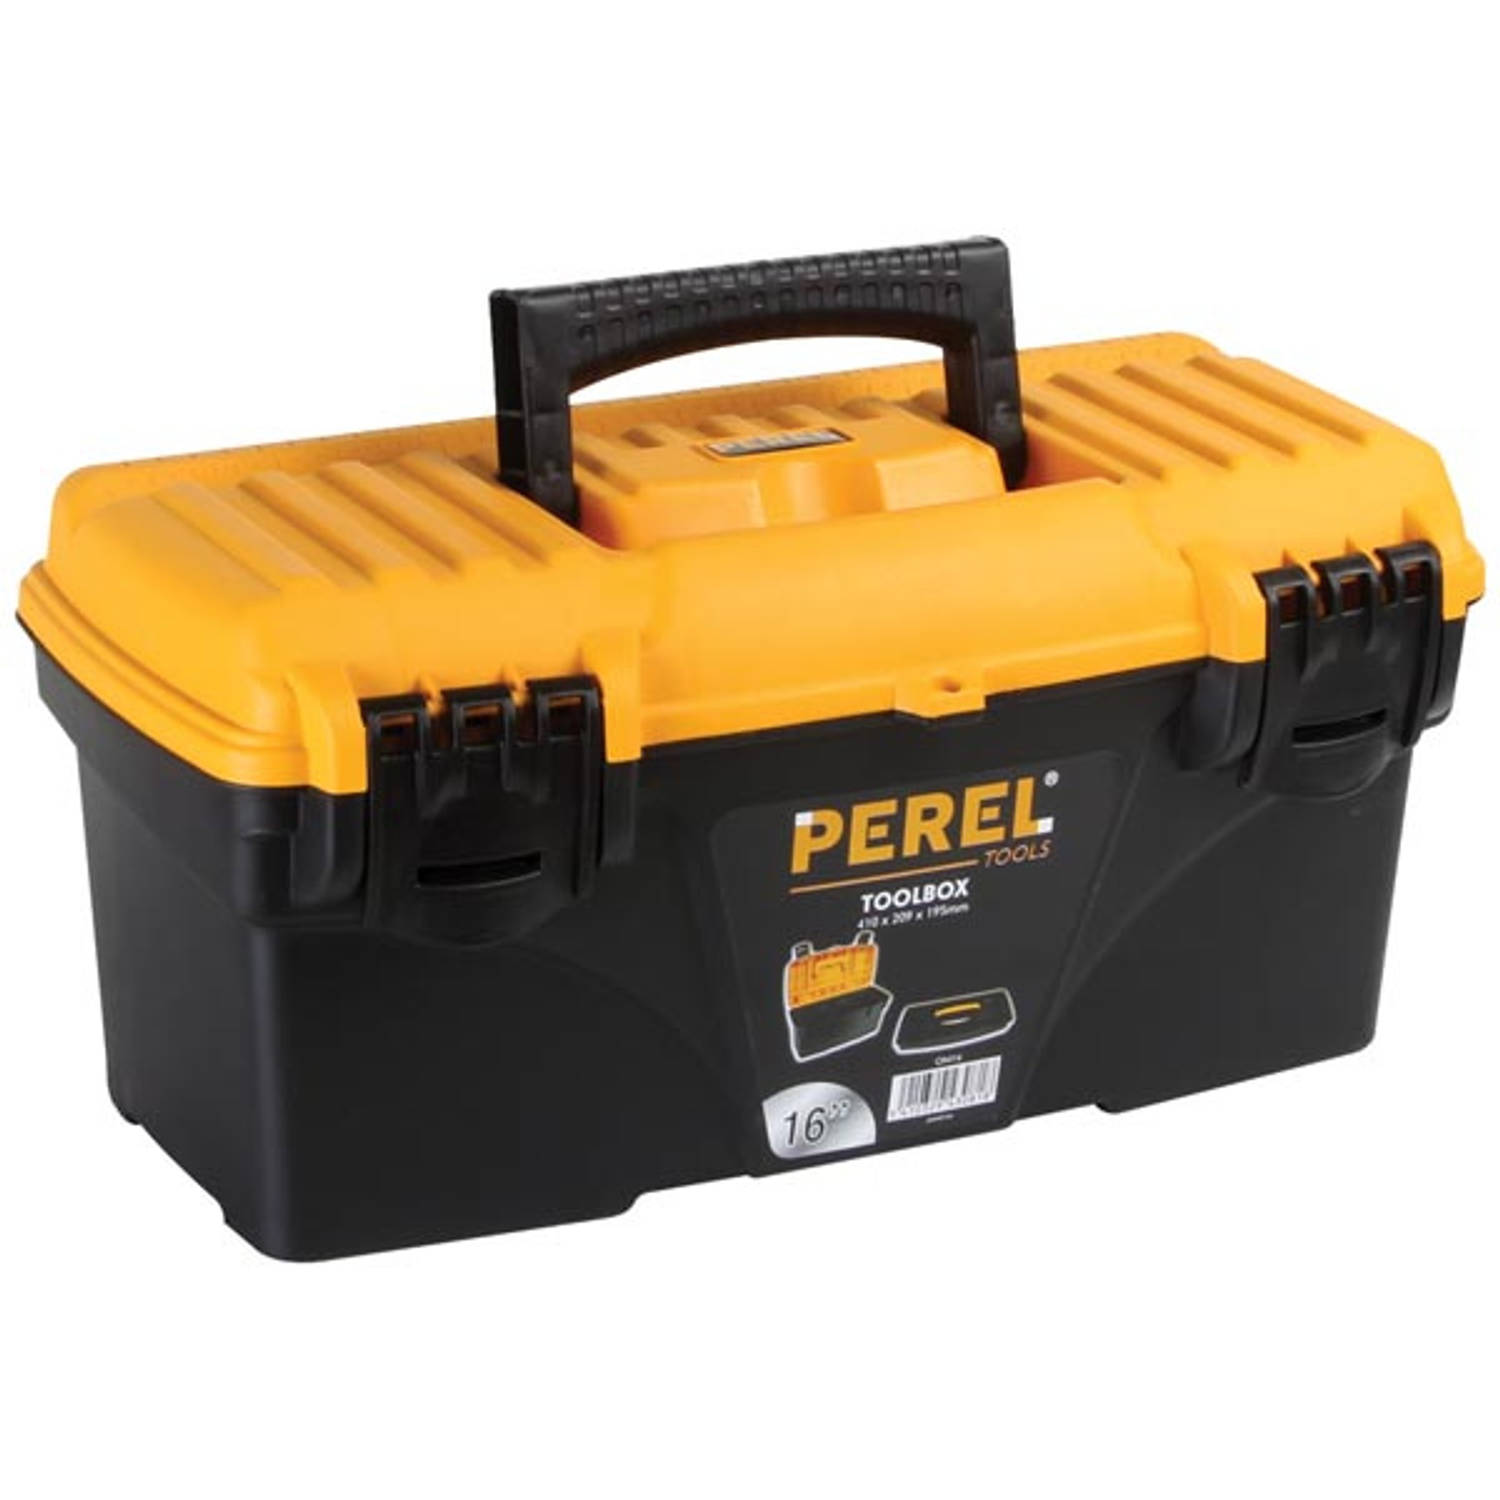 Perel gereedschapskoffer 41 x 20,9 x 19,5 cm zwart/oranje